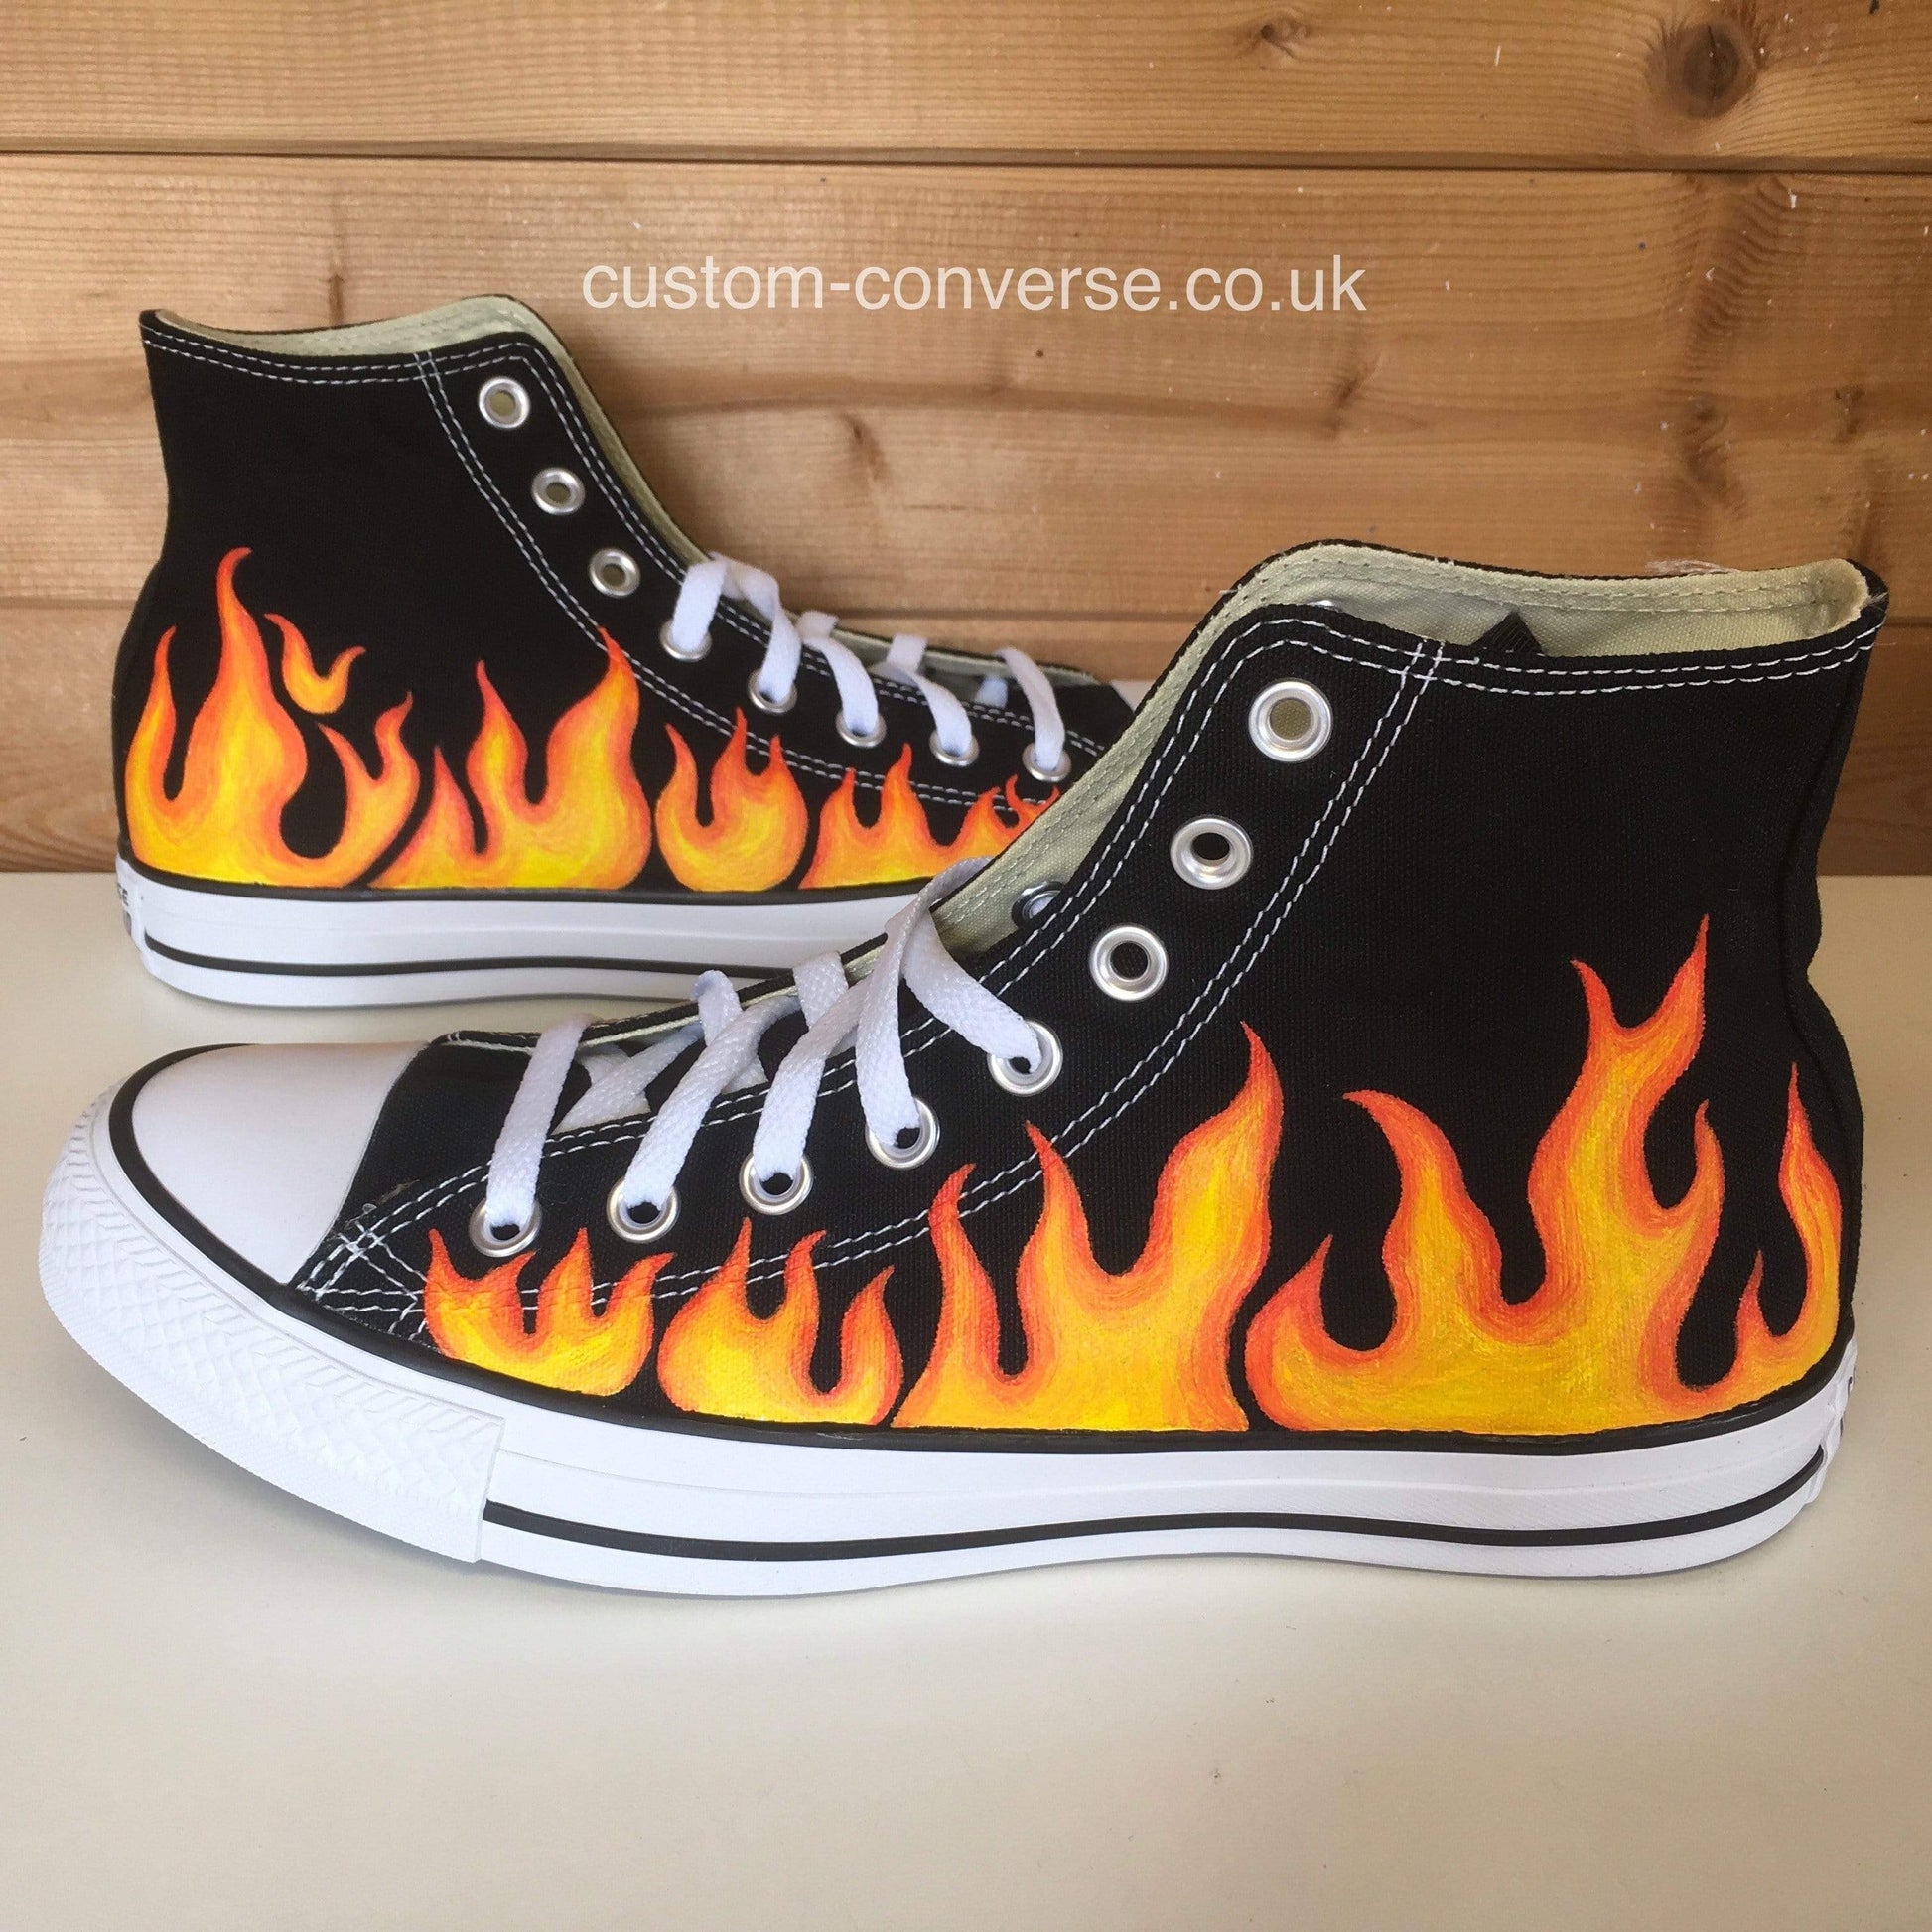 Flames - Custom Converse Ltd.